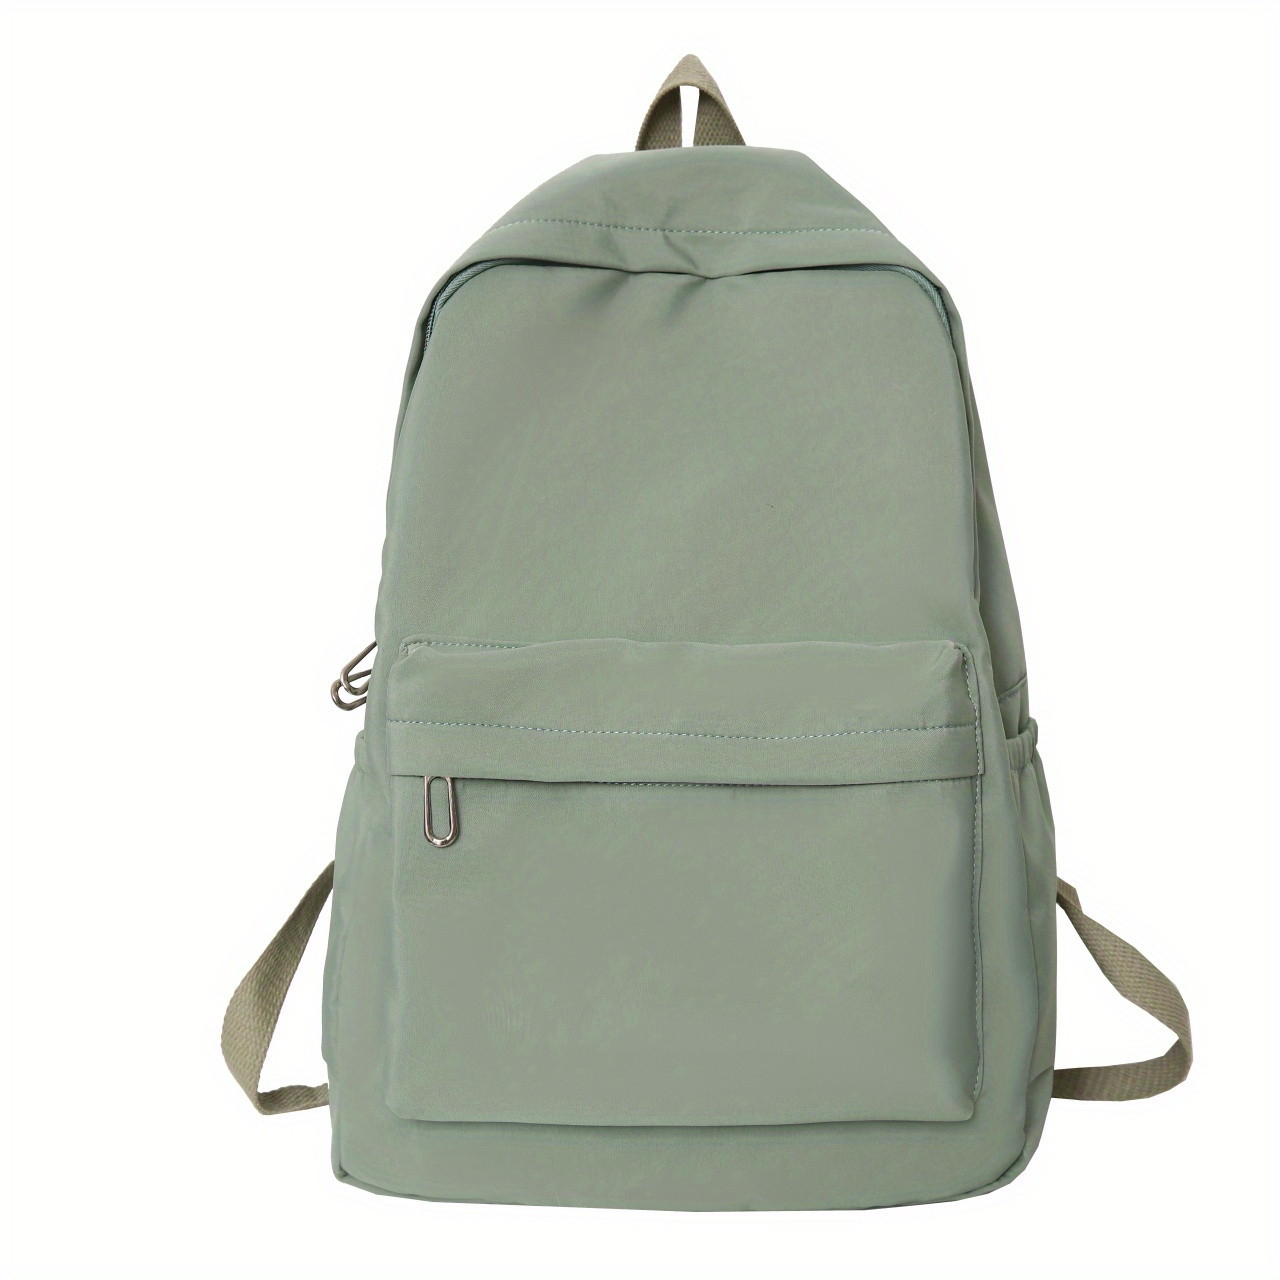 Preppy Style Plain Canvas Backpacks for Women in Khaki Gray Green